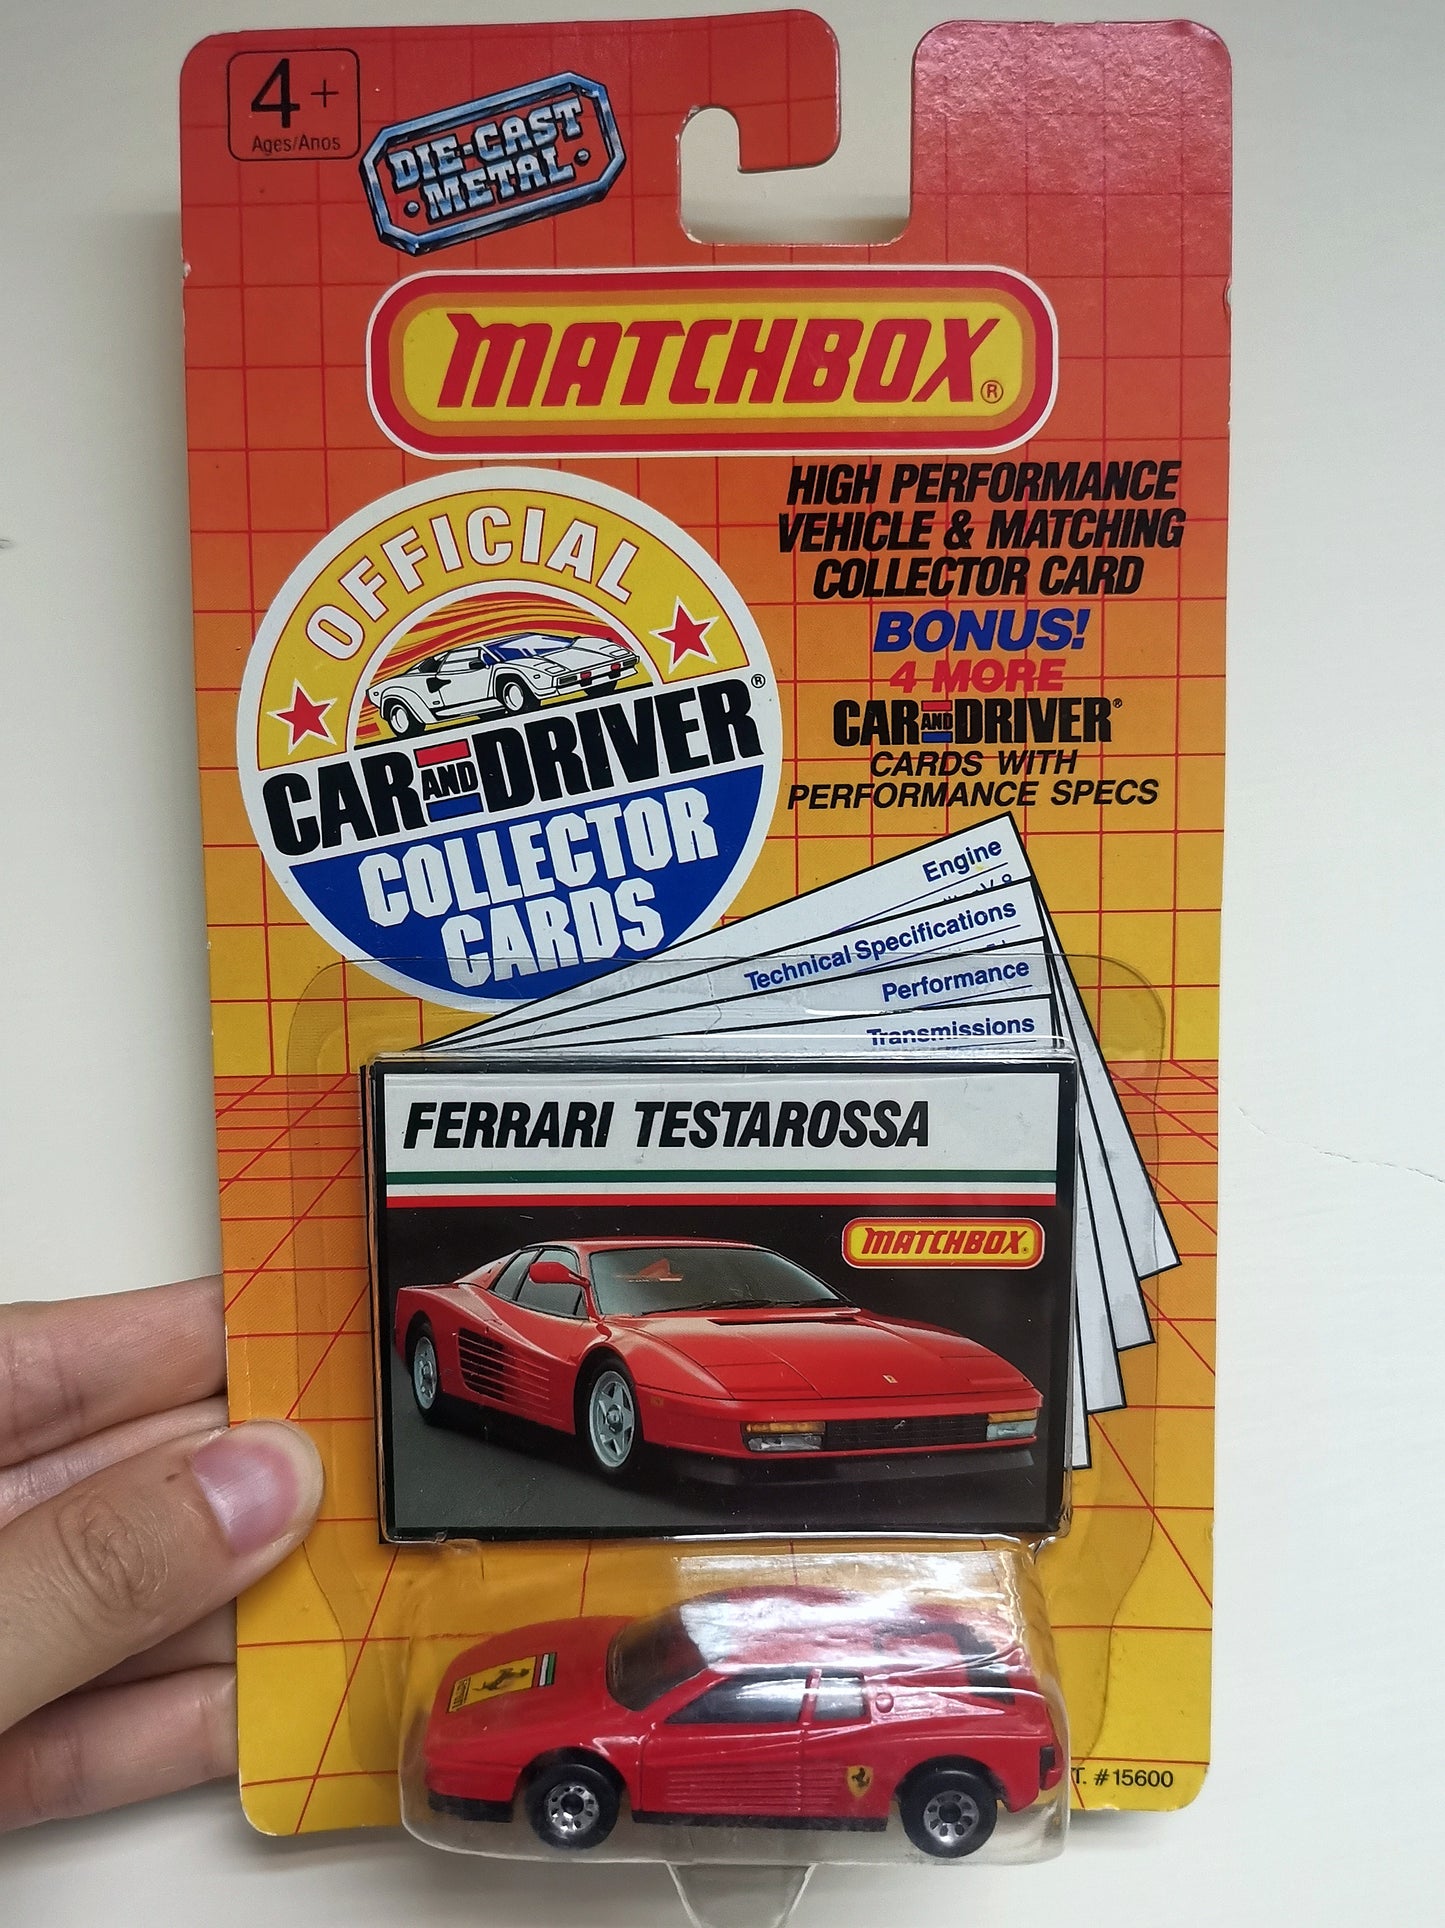 MatchBox Car and Driver Edition Ferrari Testarossa